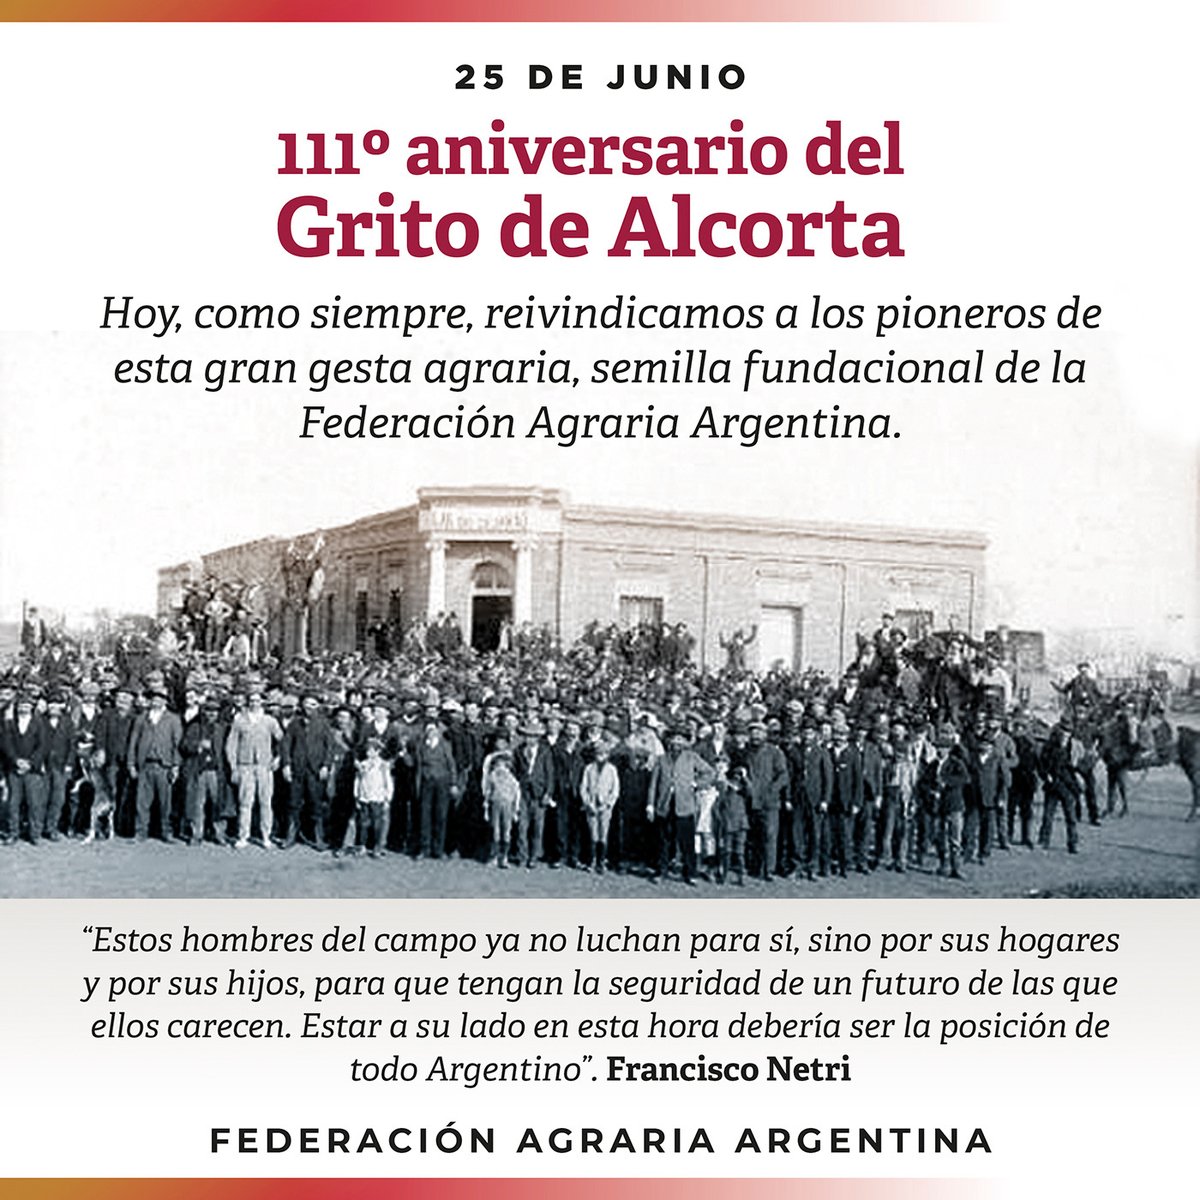 Federación Agraria Argentina on Twitter: "https://t.co/0uk7KySFkn" / Twitter